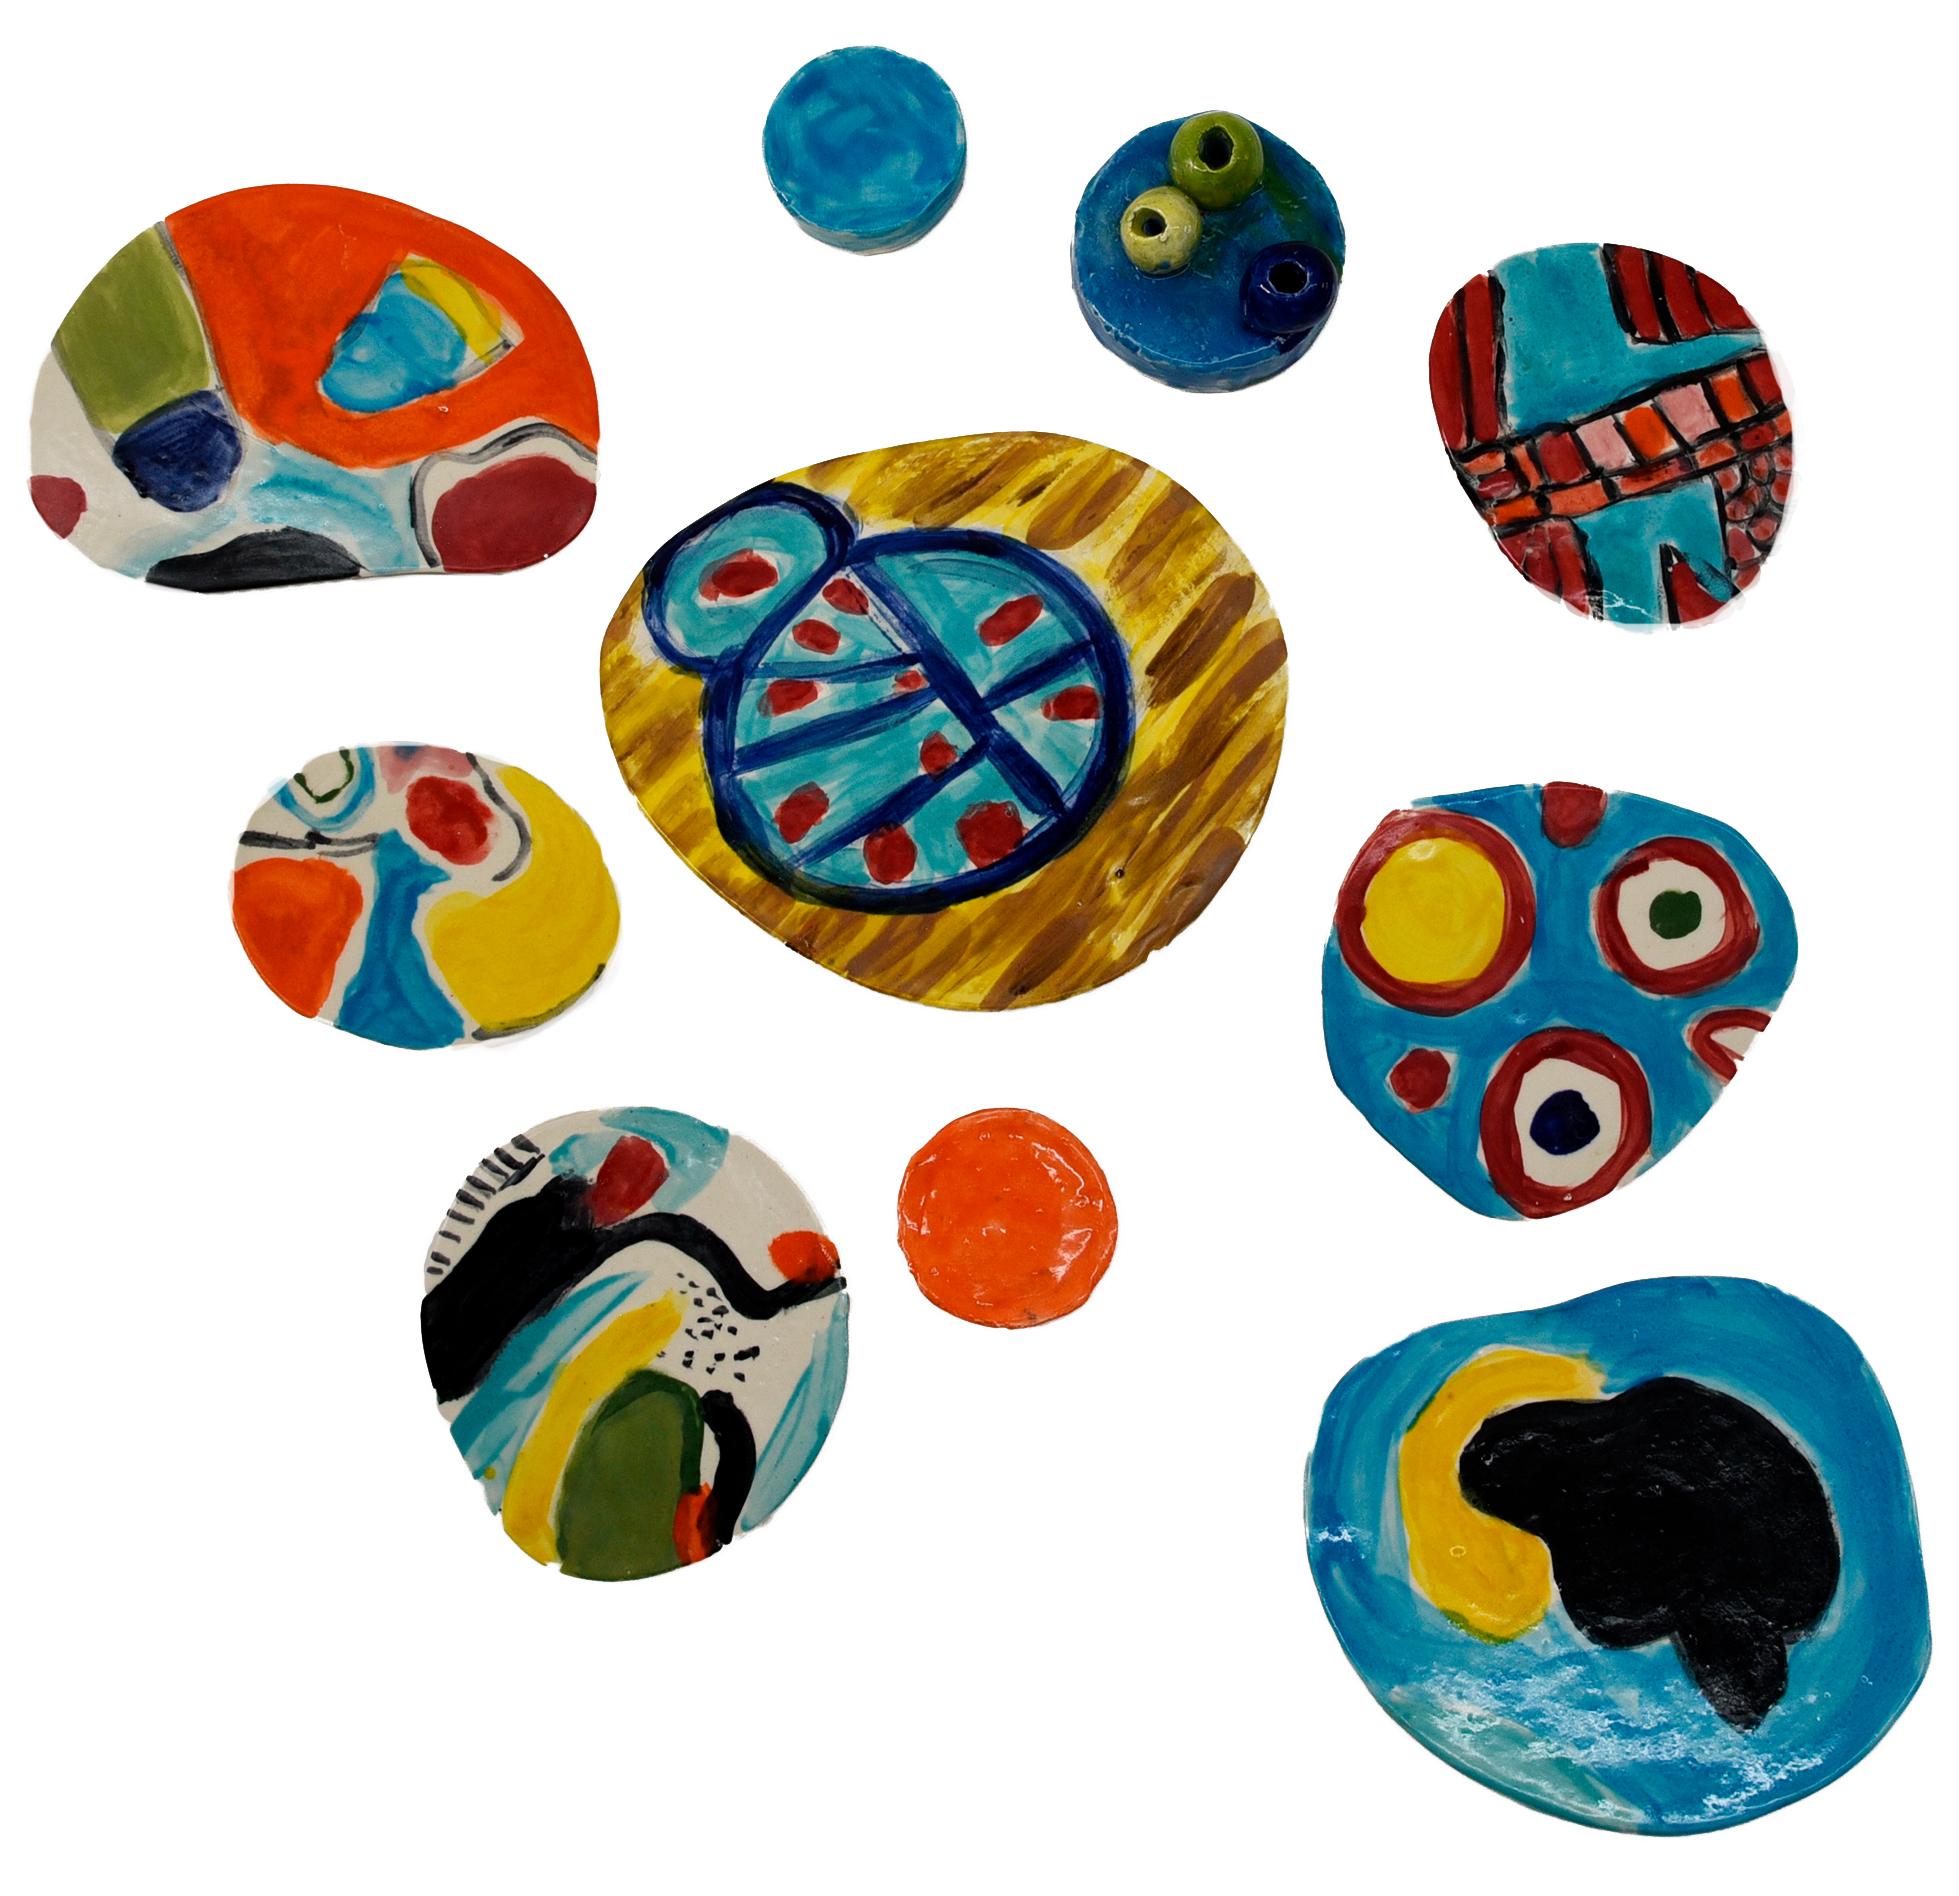 Charo Oquet Still-Life Sculpture - Wall sculpture Untitled XXVI. Set of 10 Glazed Ceramic Discs